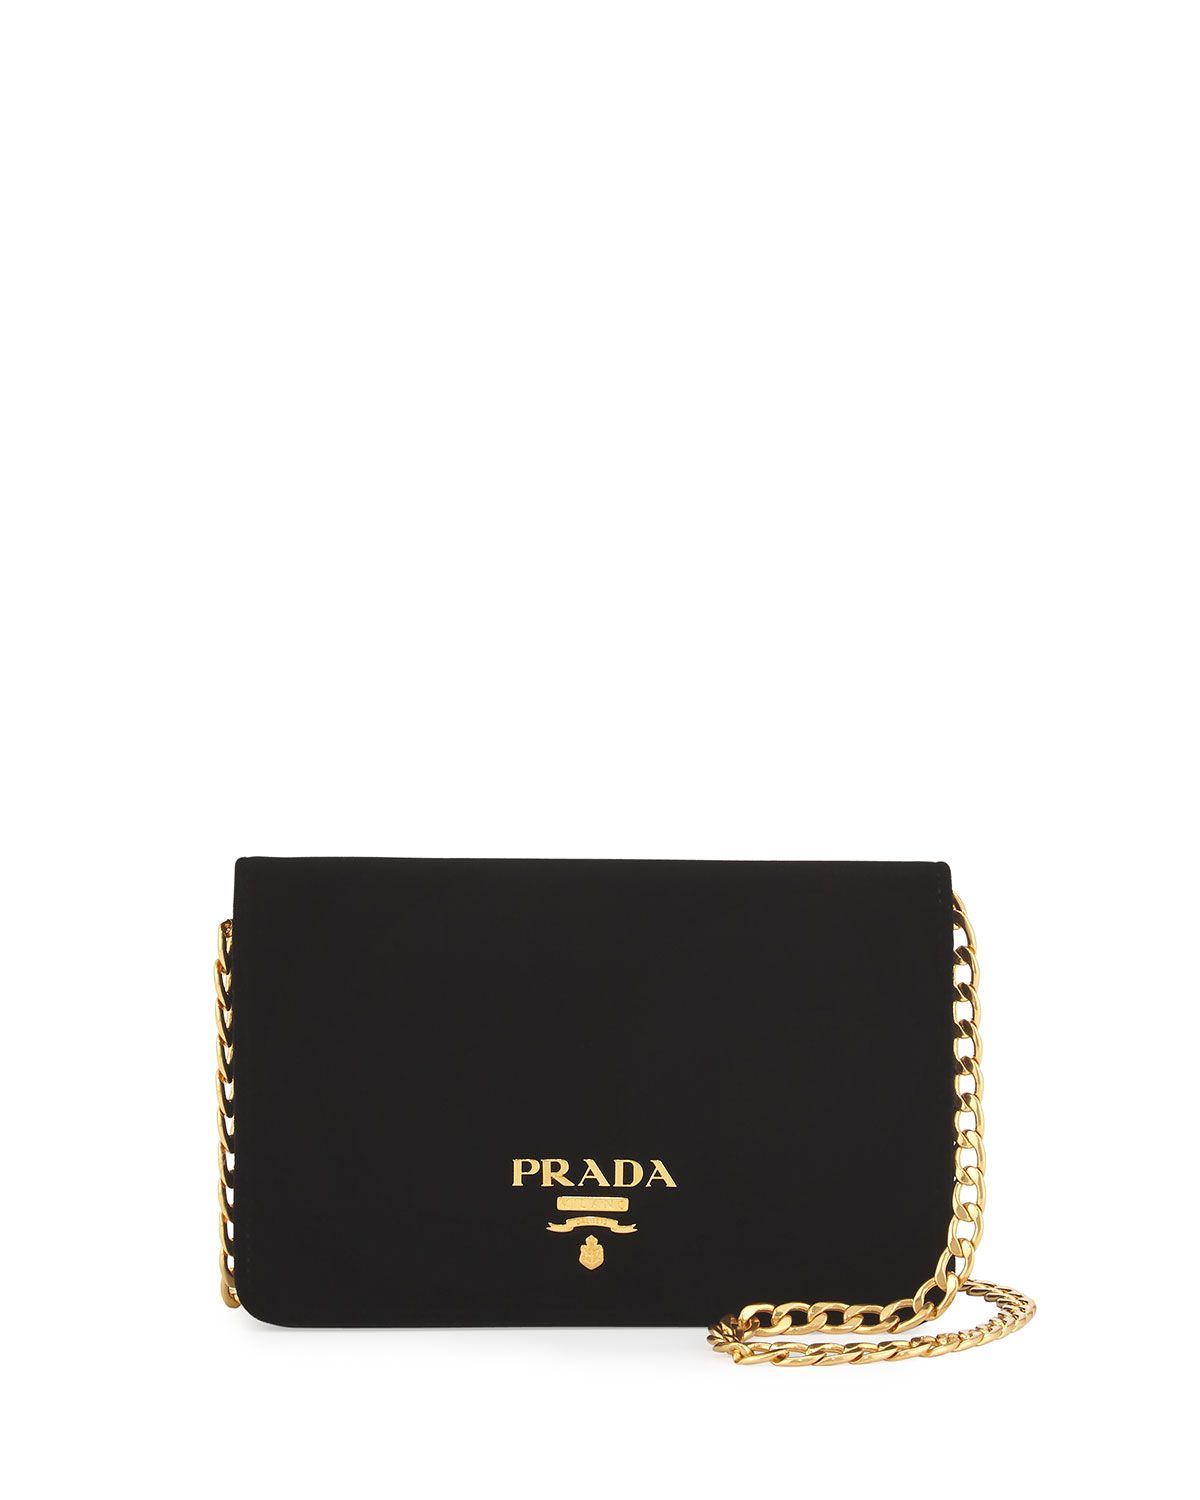 Prada Velvet Chain Shoulder Bag, Black (Nero) | Neiman Marcus